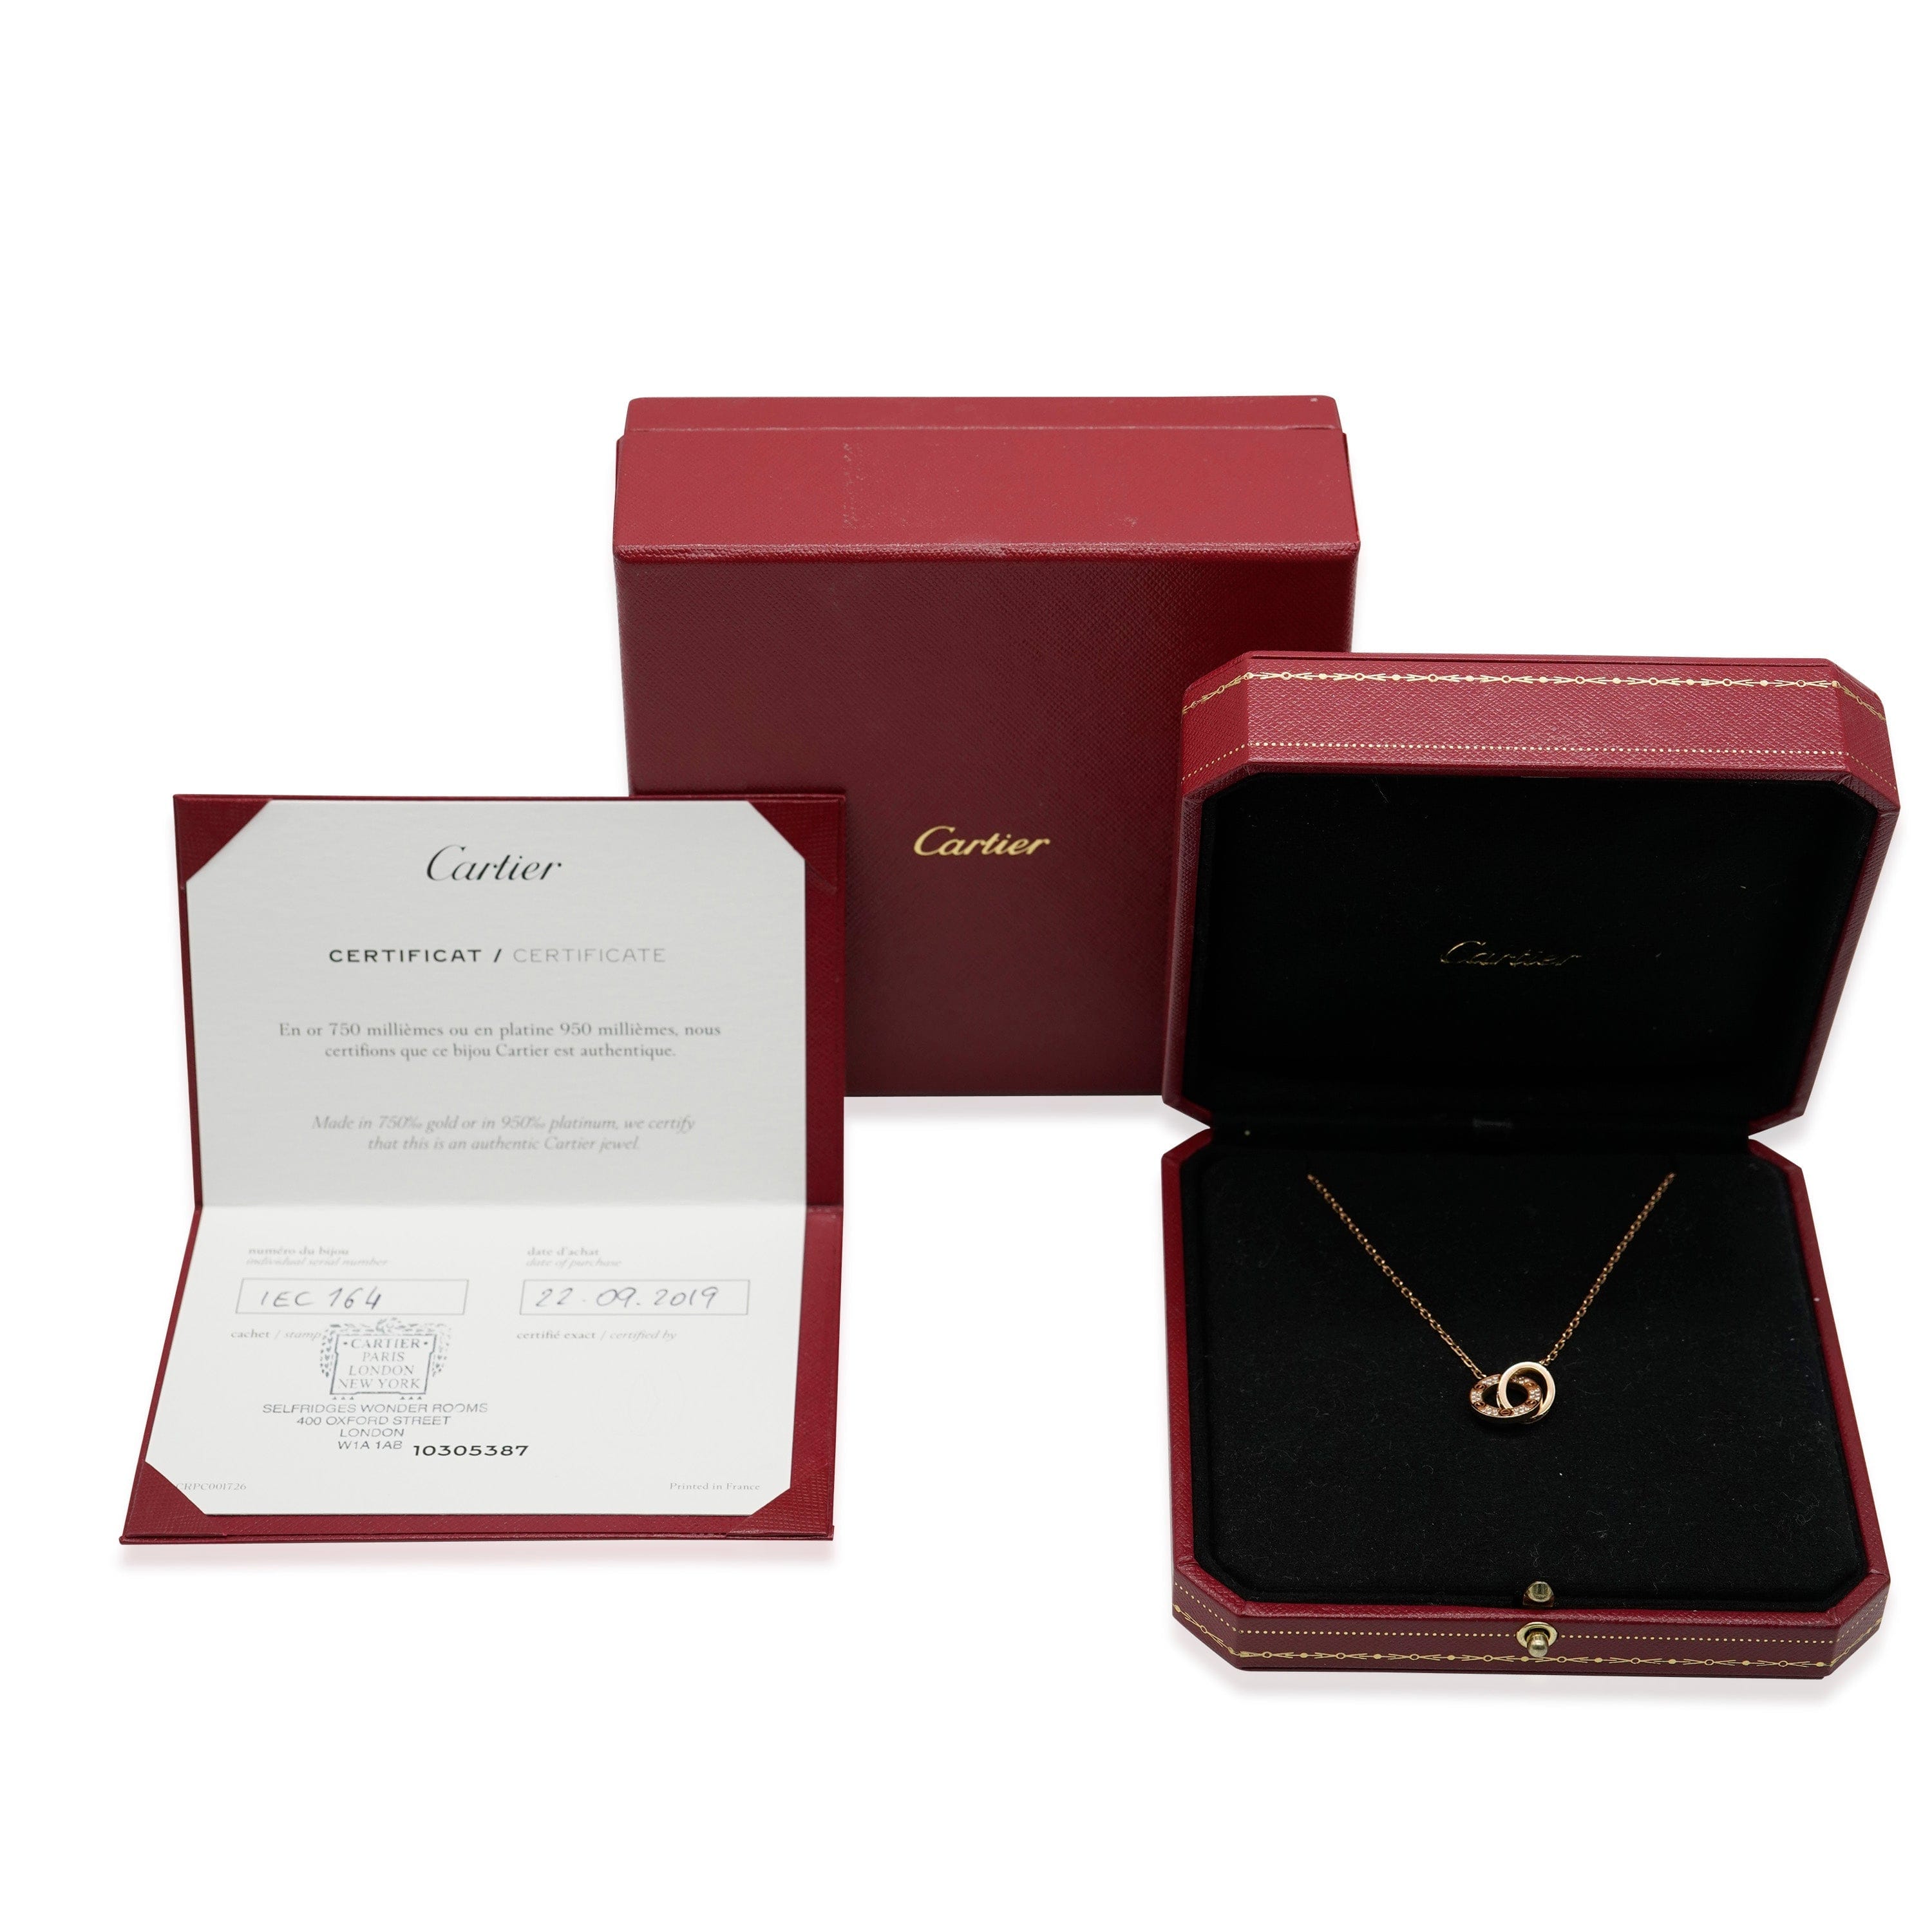 Cartier Cartier Love Diamond Necklace in 18K Rose Gold 0.30 CTW